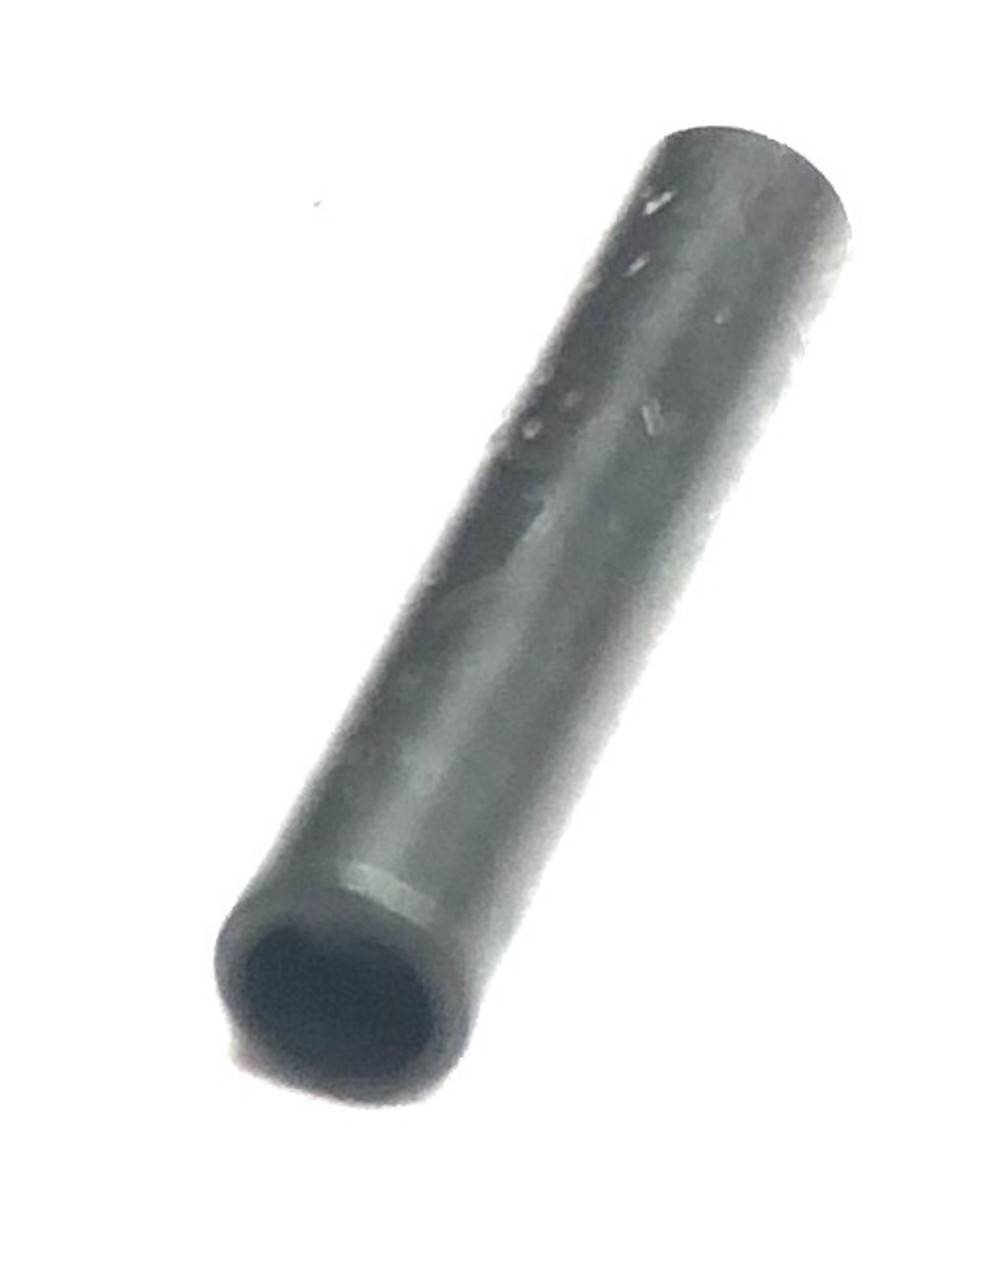 MG-34 Top Cover Hinge Retaining Pin